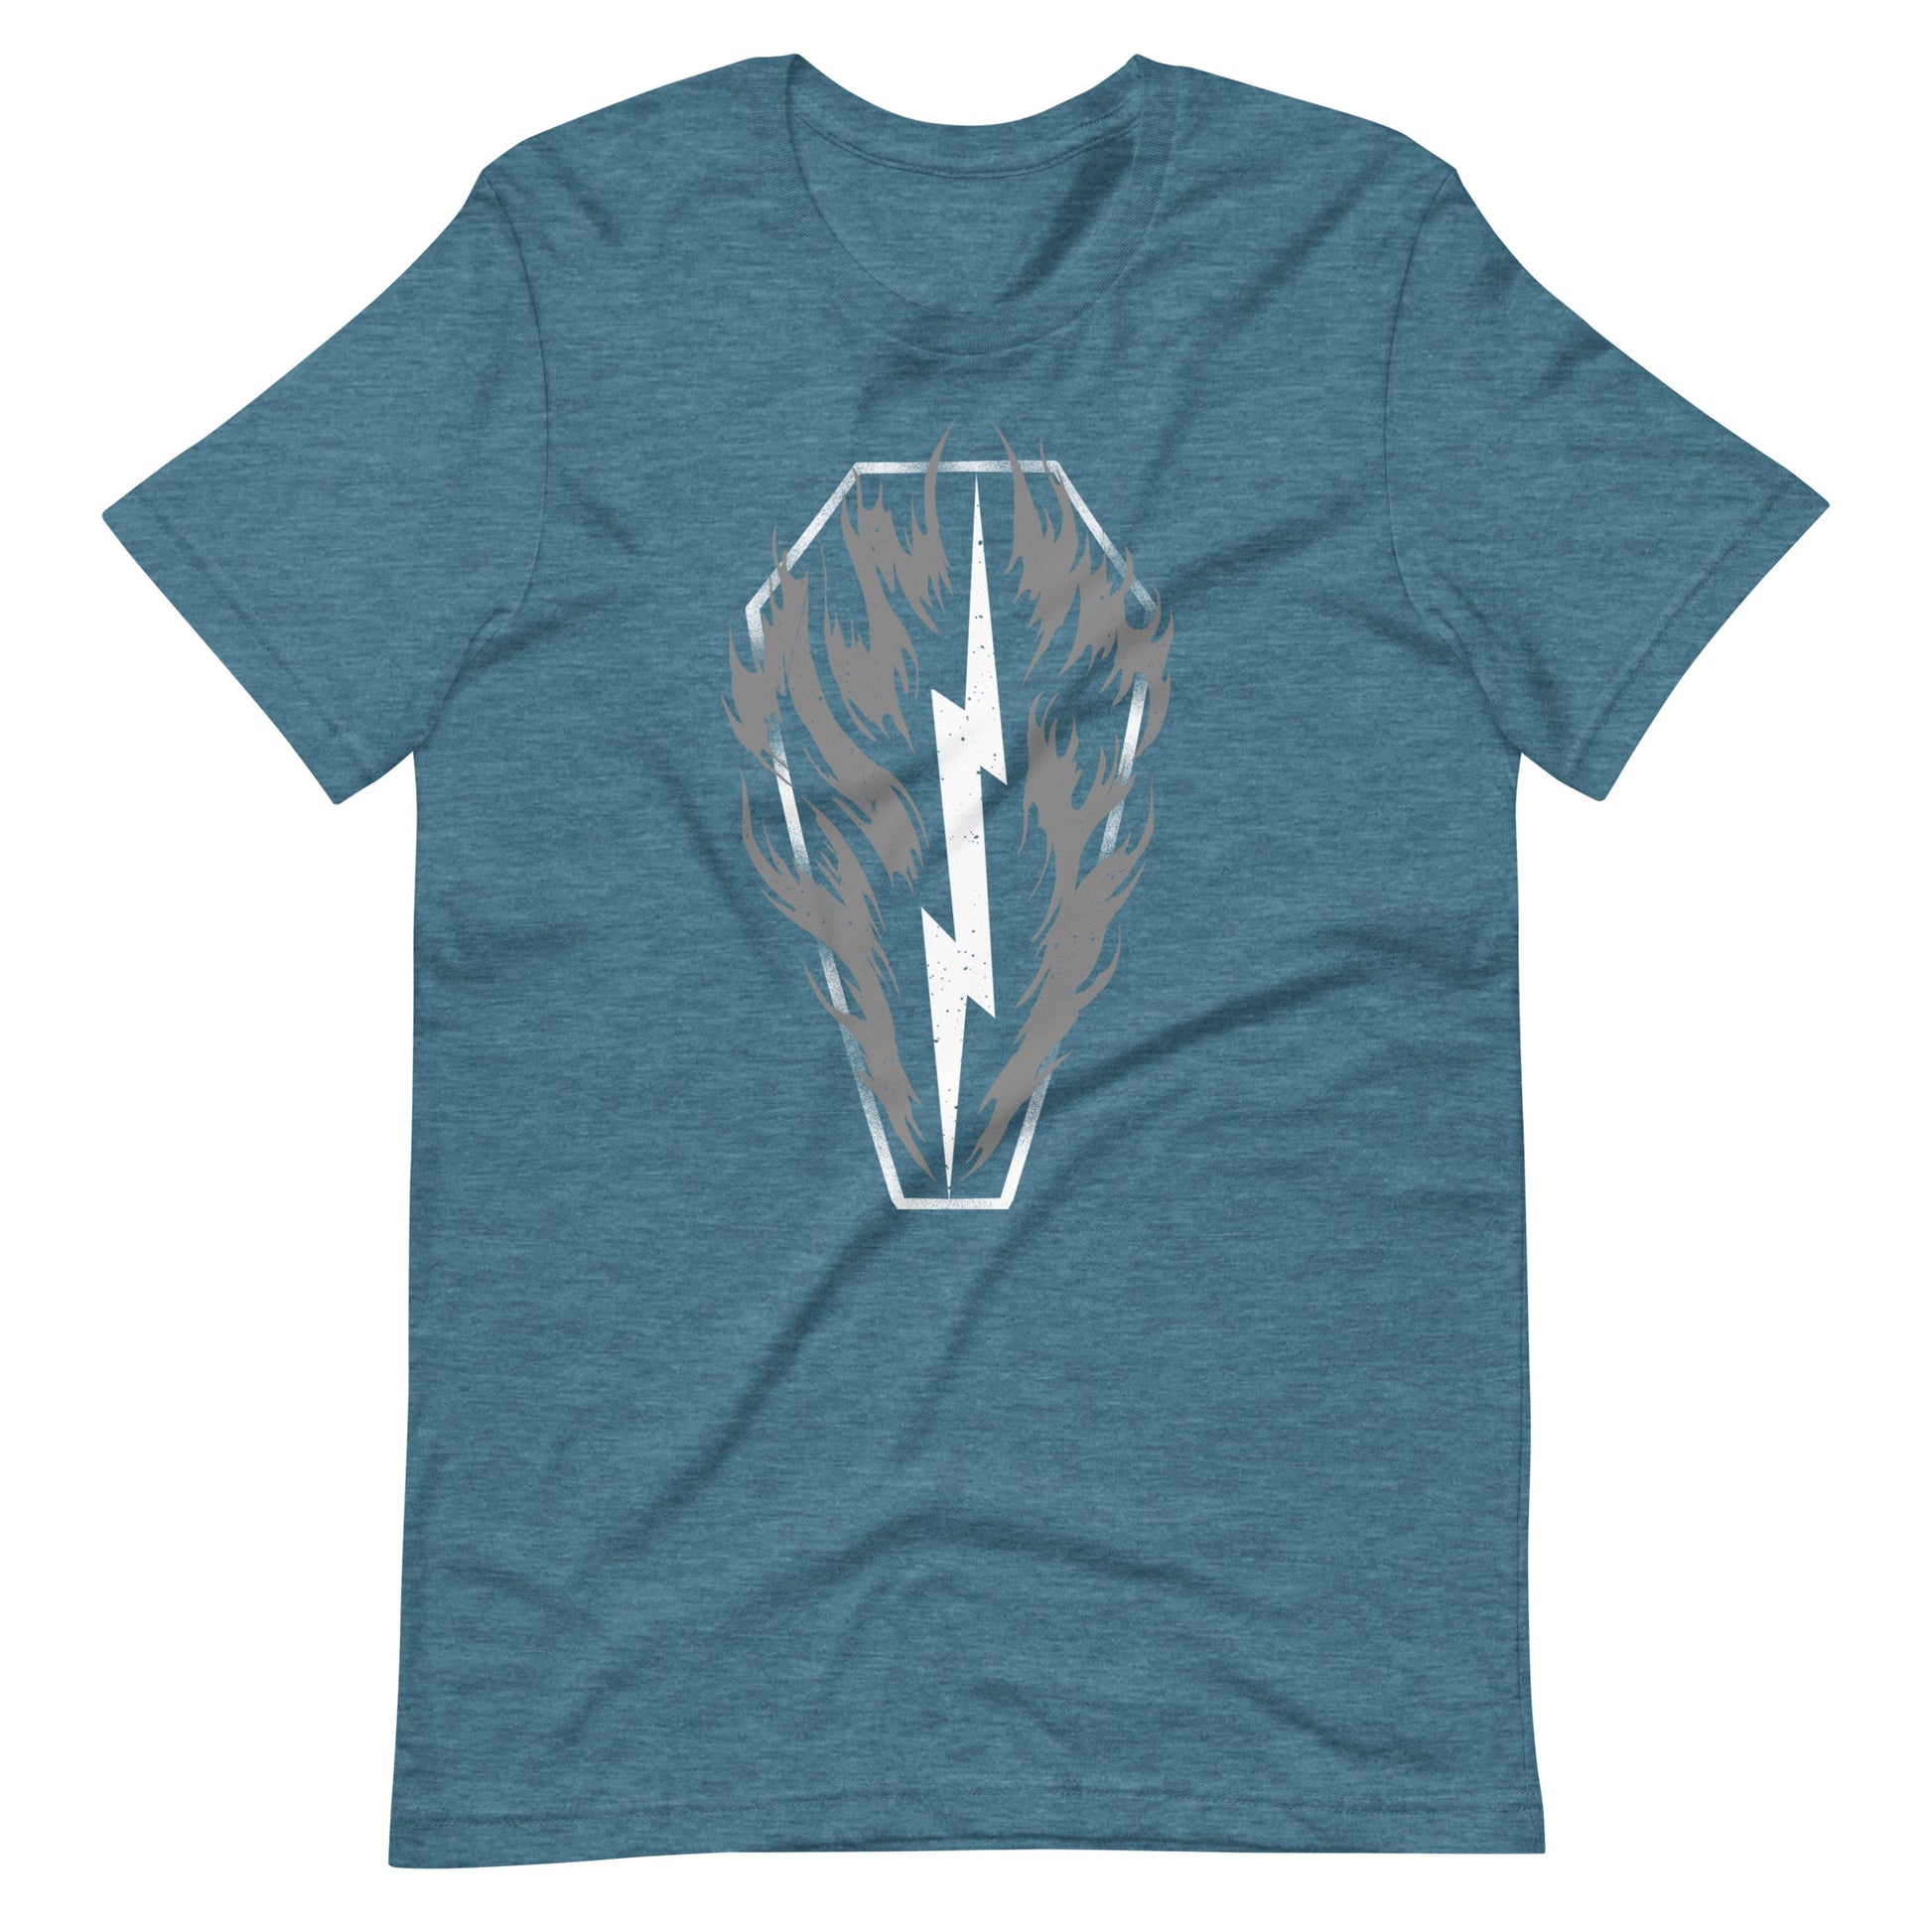 Thunder - Men's t-shirt - Heather Deep Teal Front